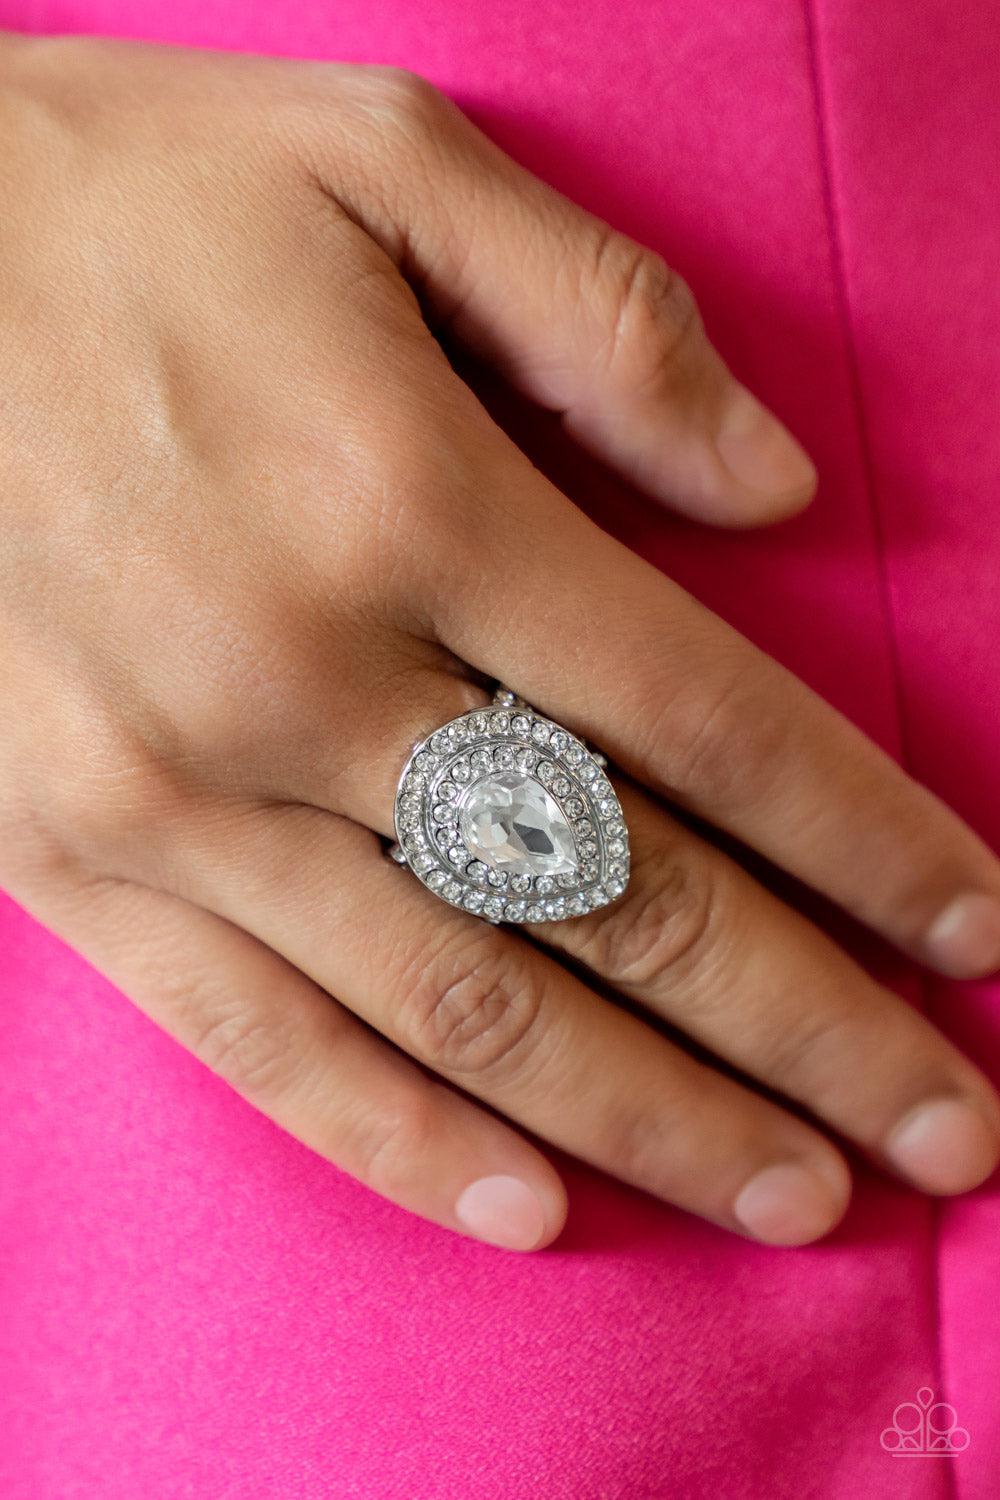 Icy Indulgence White Rhinestone Ring - Paparazzi Accessories-on model - CarasShop.com - $5 Jewelry by Cara Jewels